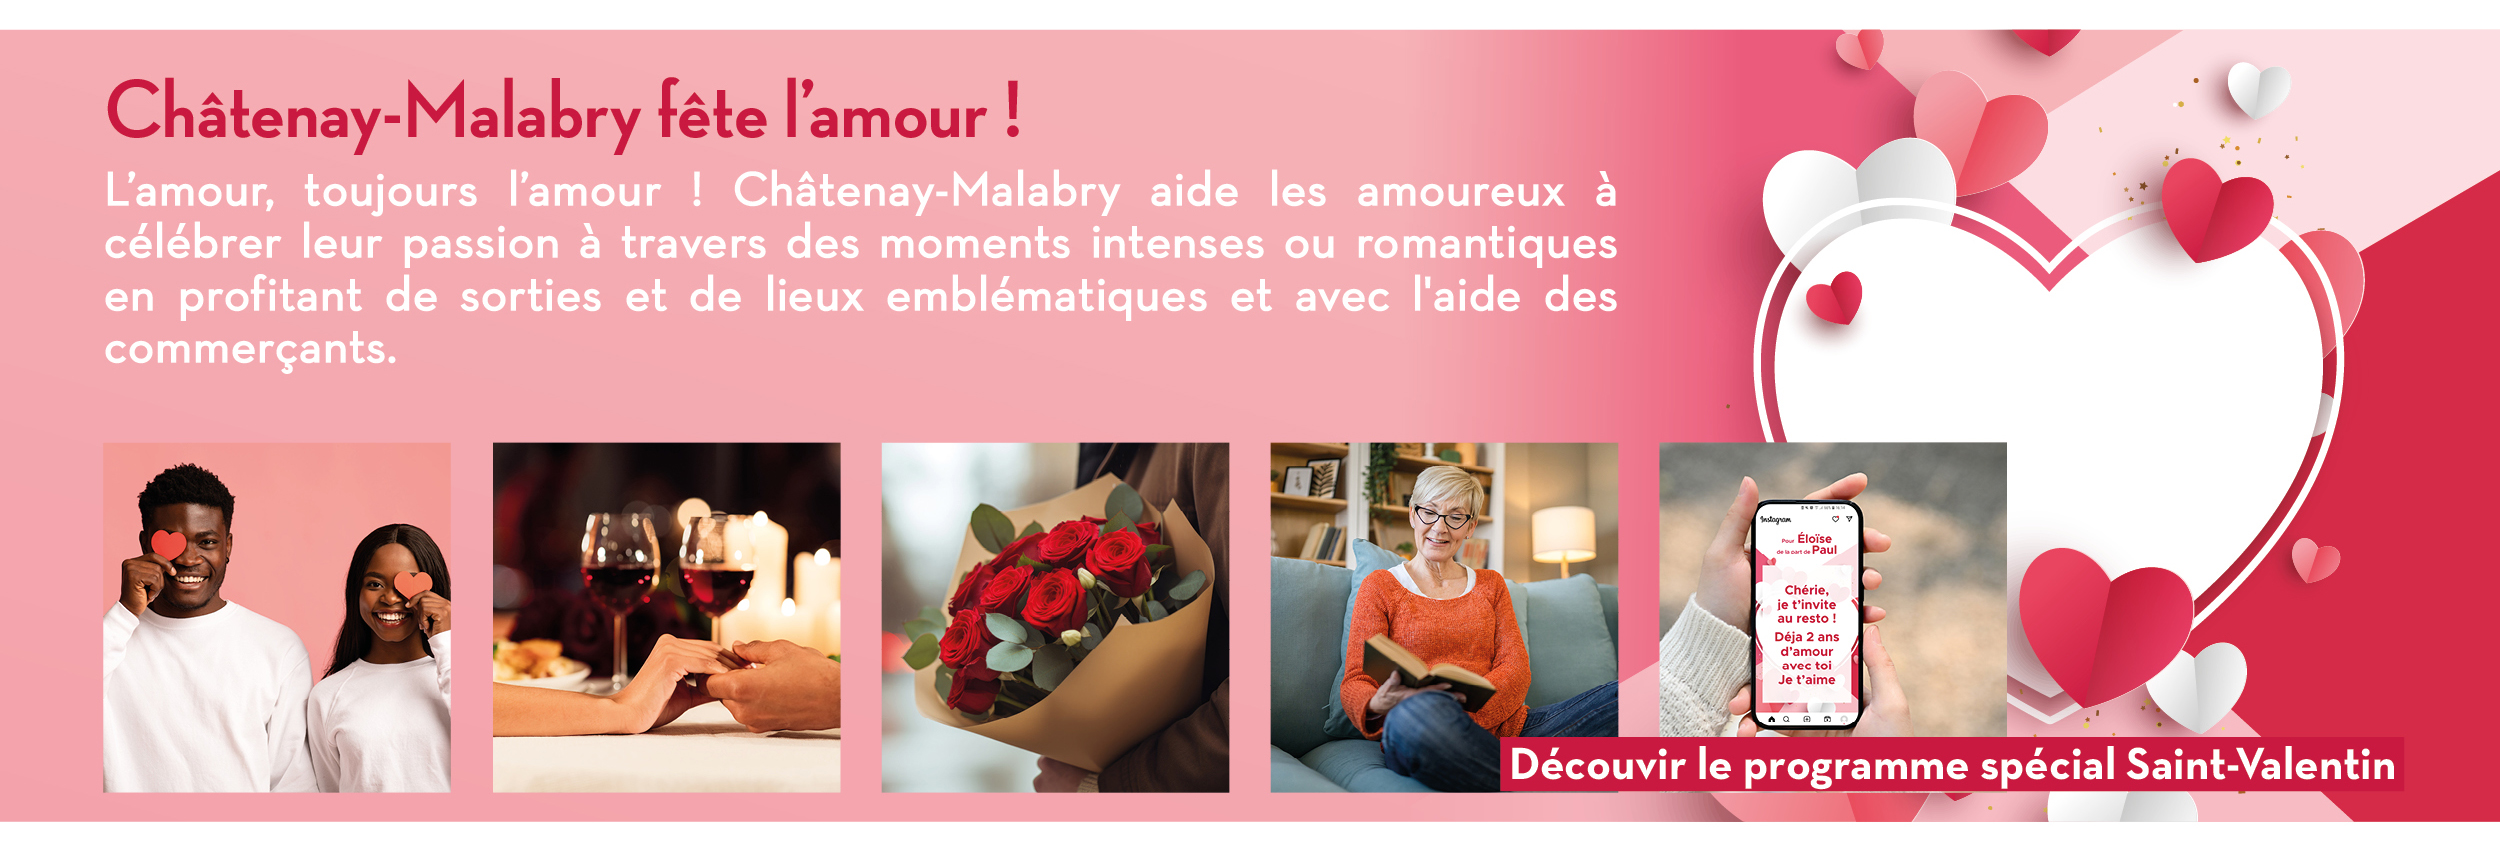 Châtenay-Malabry fête l’amour !